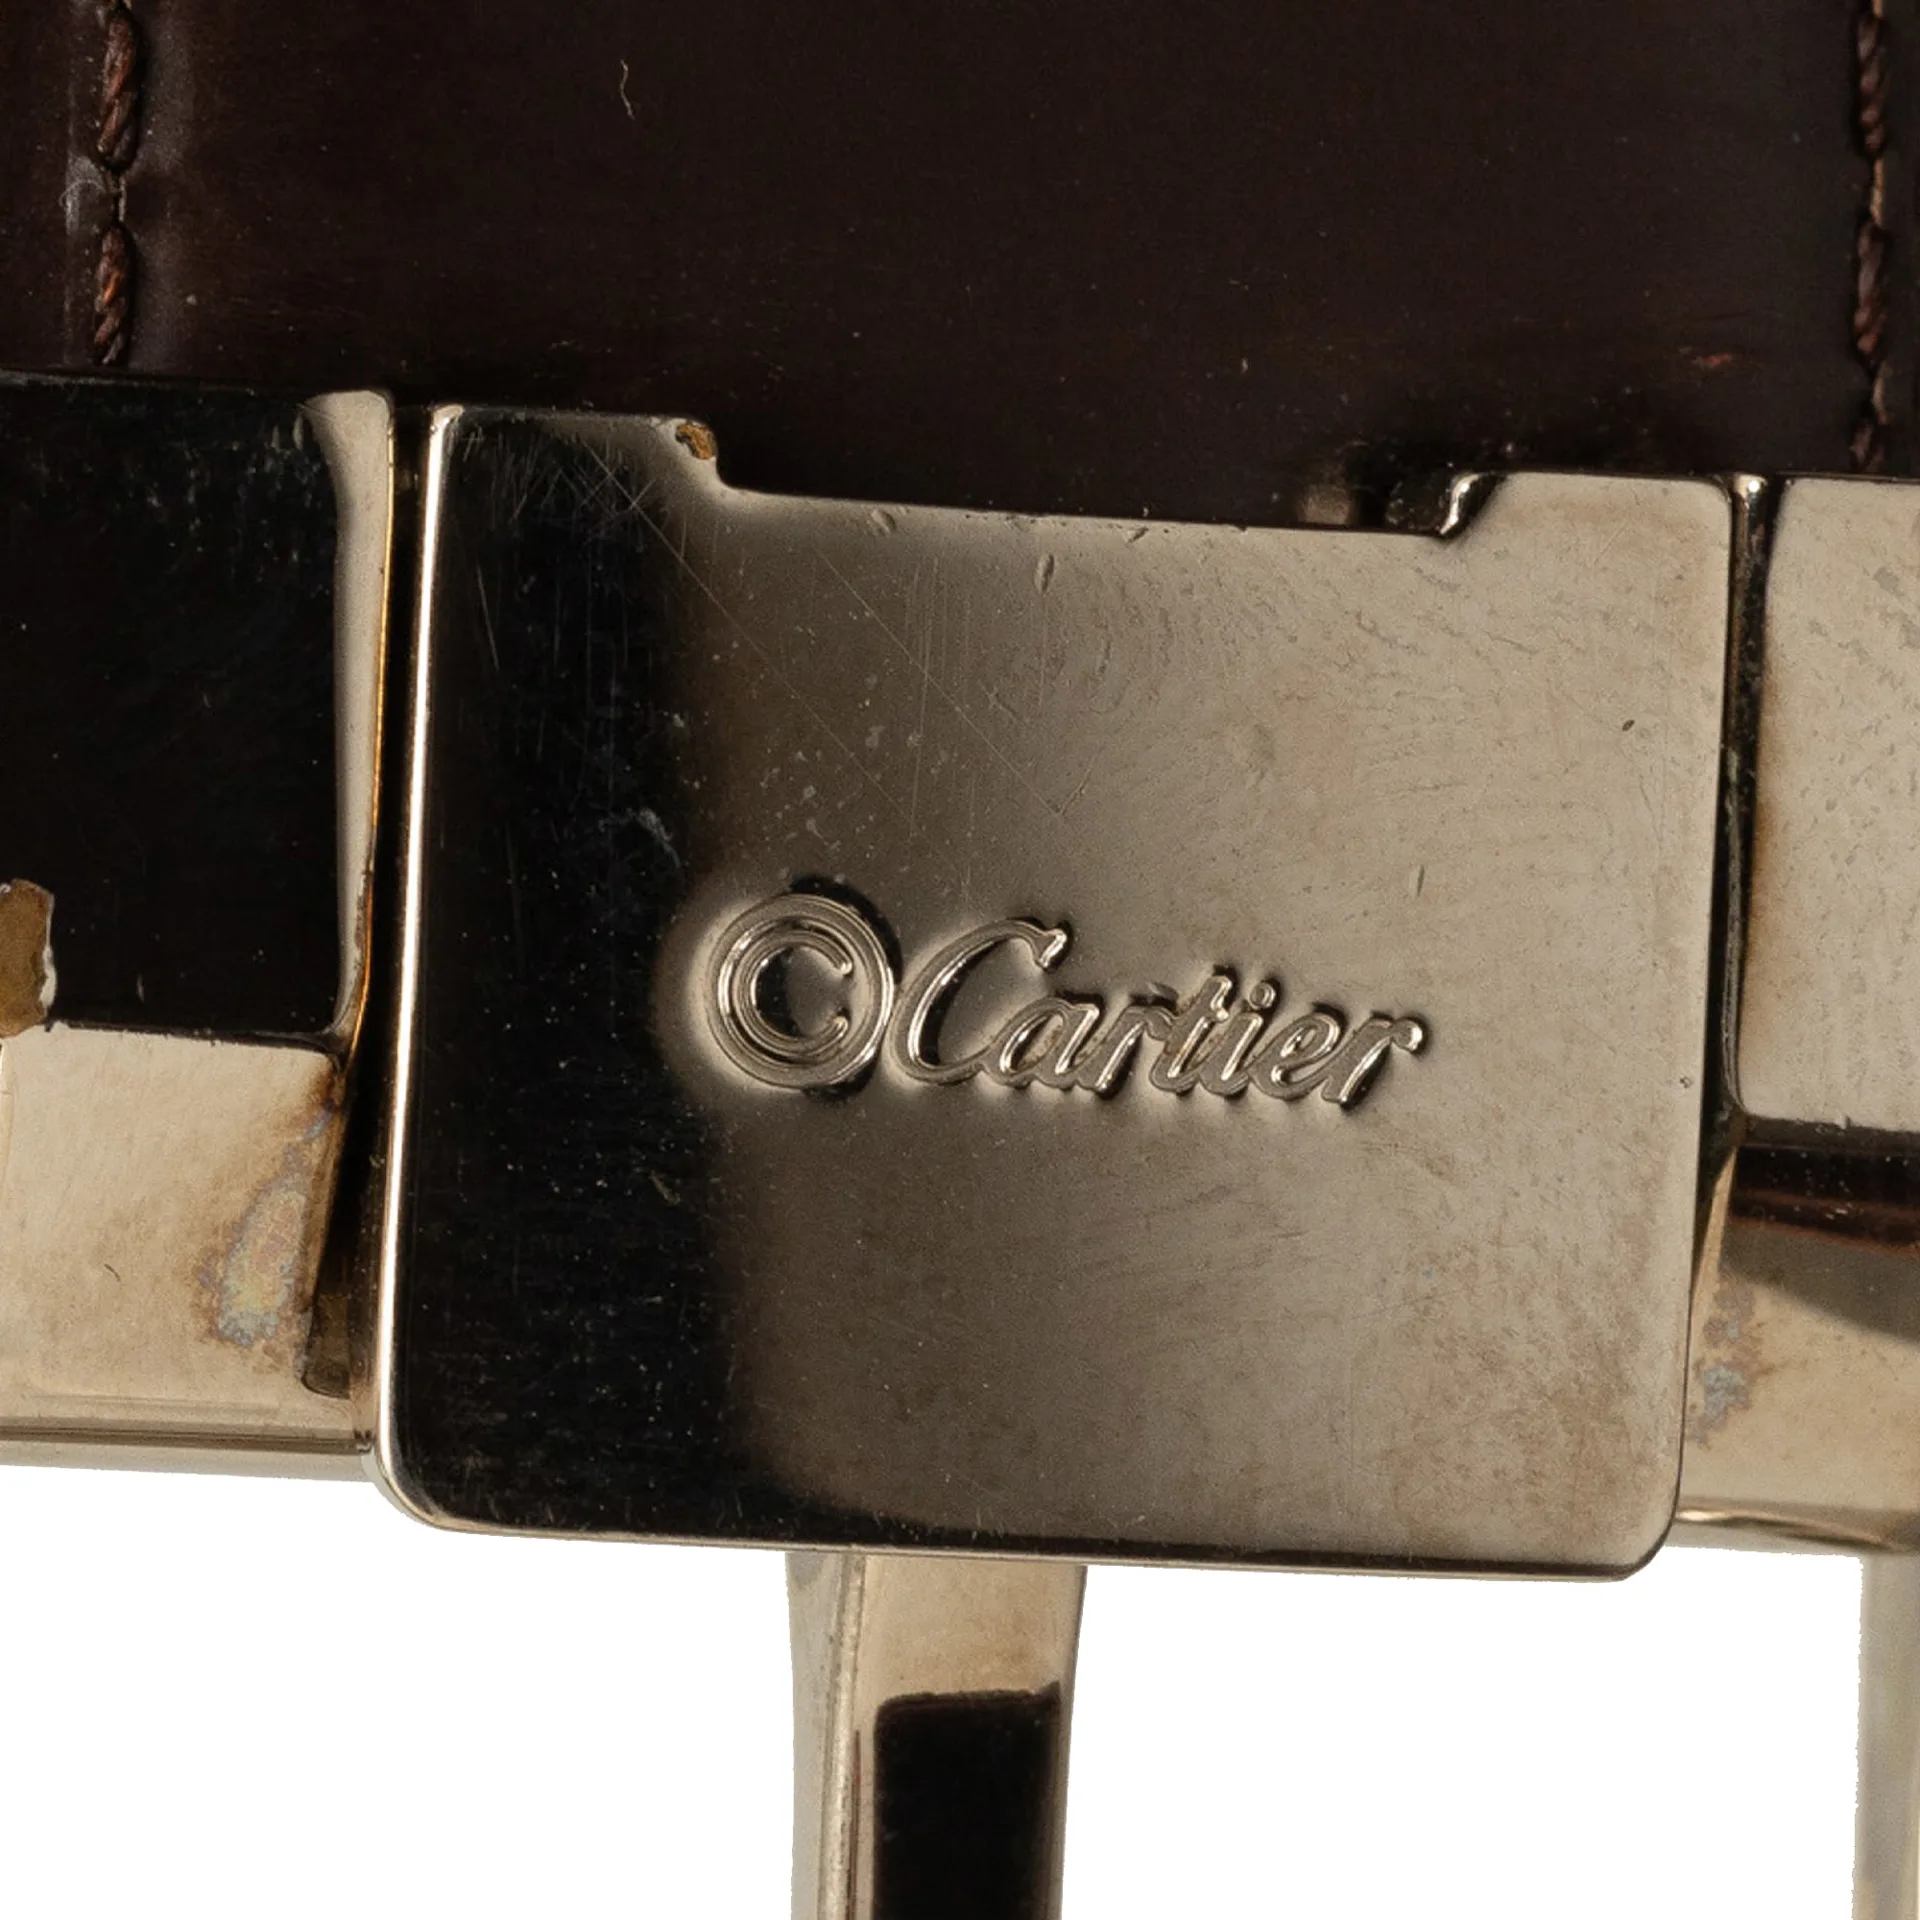 Cartier Leather Belt